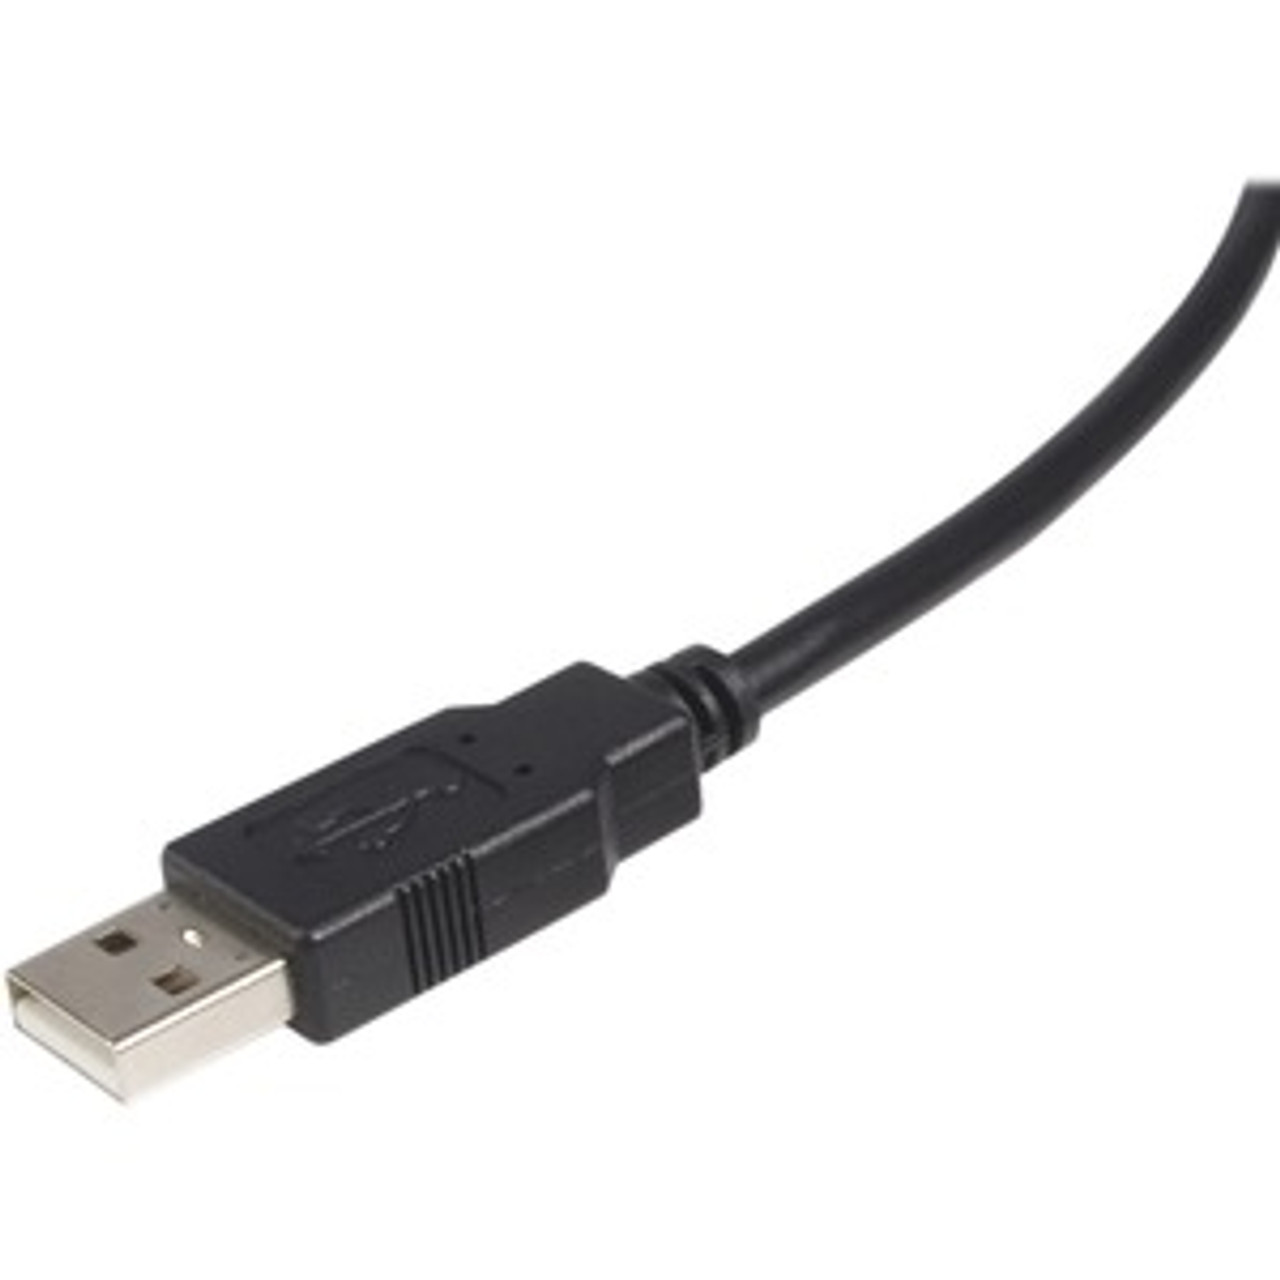 USB2HAB15